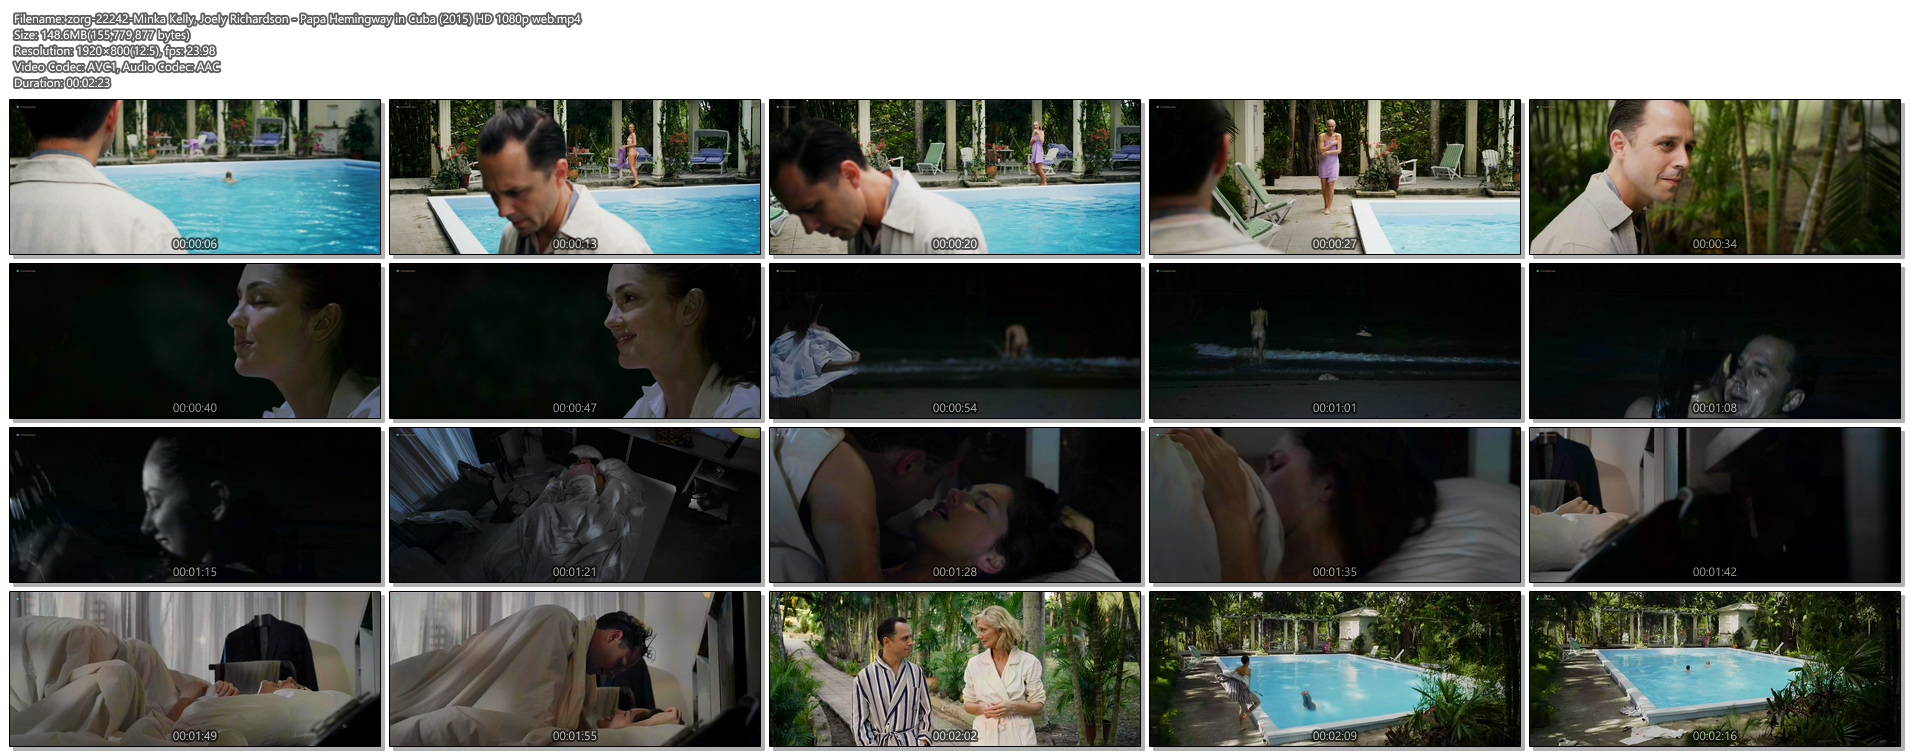 Minka Kelly nude butt Joely Richardson nude and skinny dipping - Papa Hemingway in Cuba (2015) HD 1080p web (1)